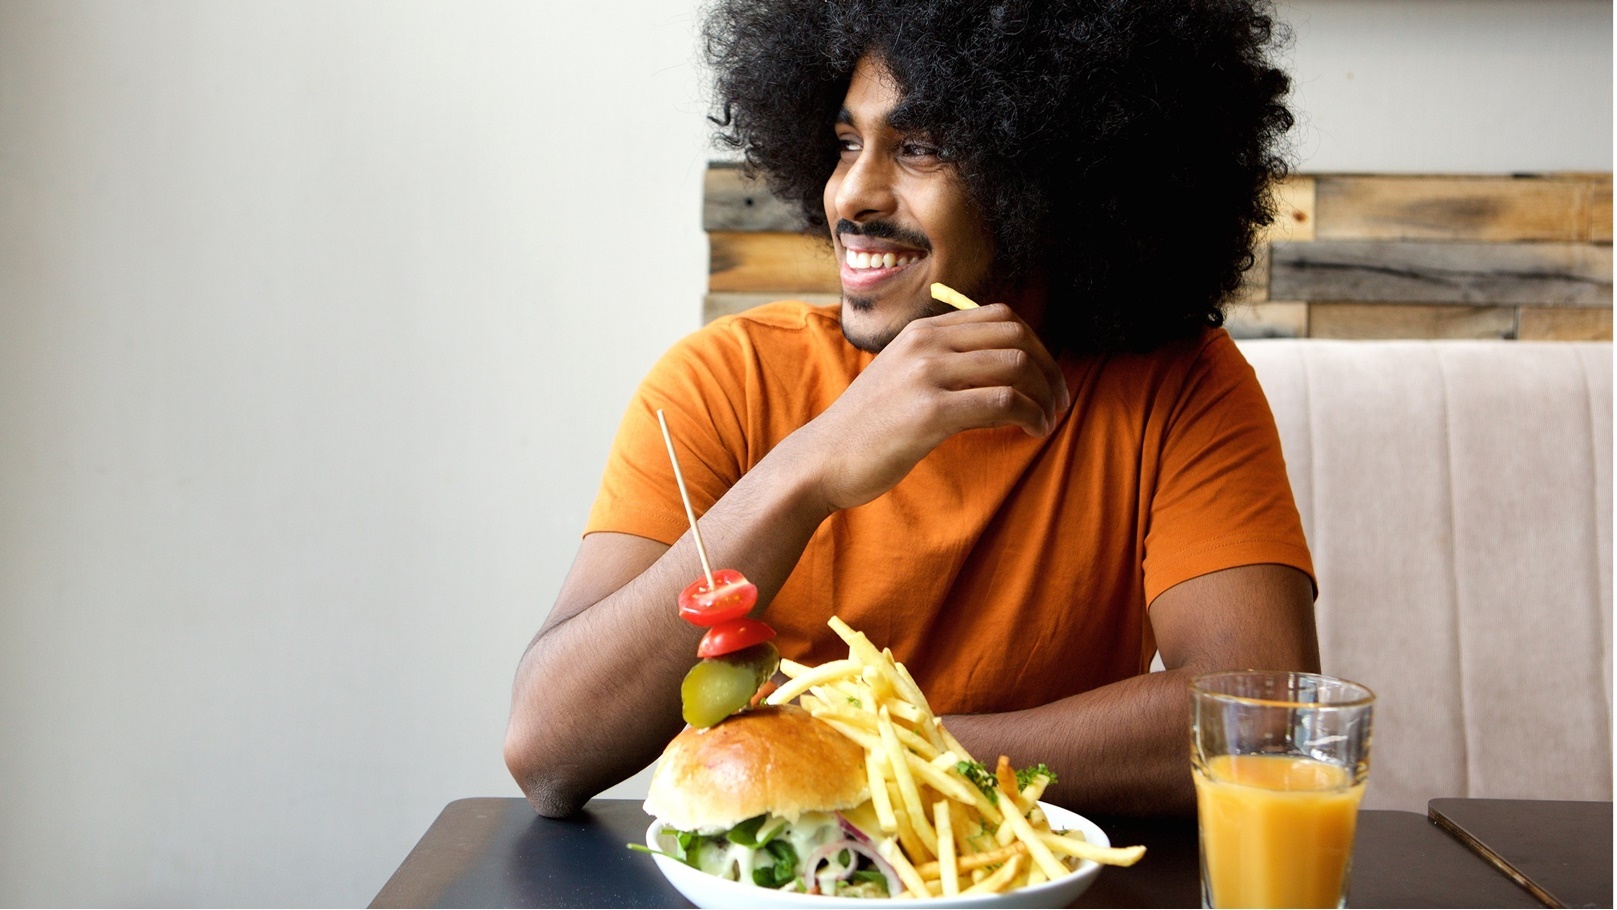 smiling-man-with-hamburger-and-fries-at-restaurant-2021-08-26-23-05-16-utc